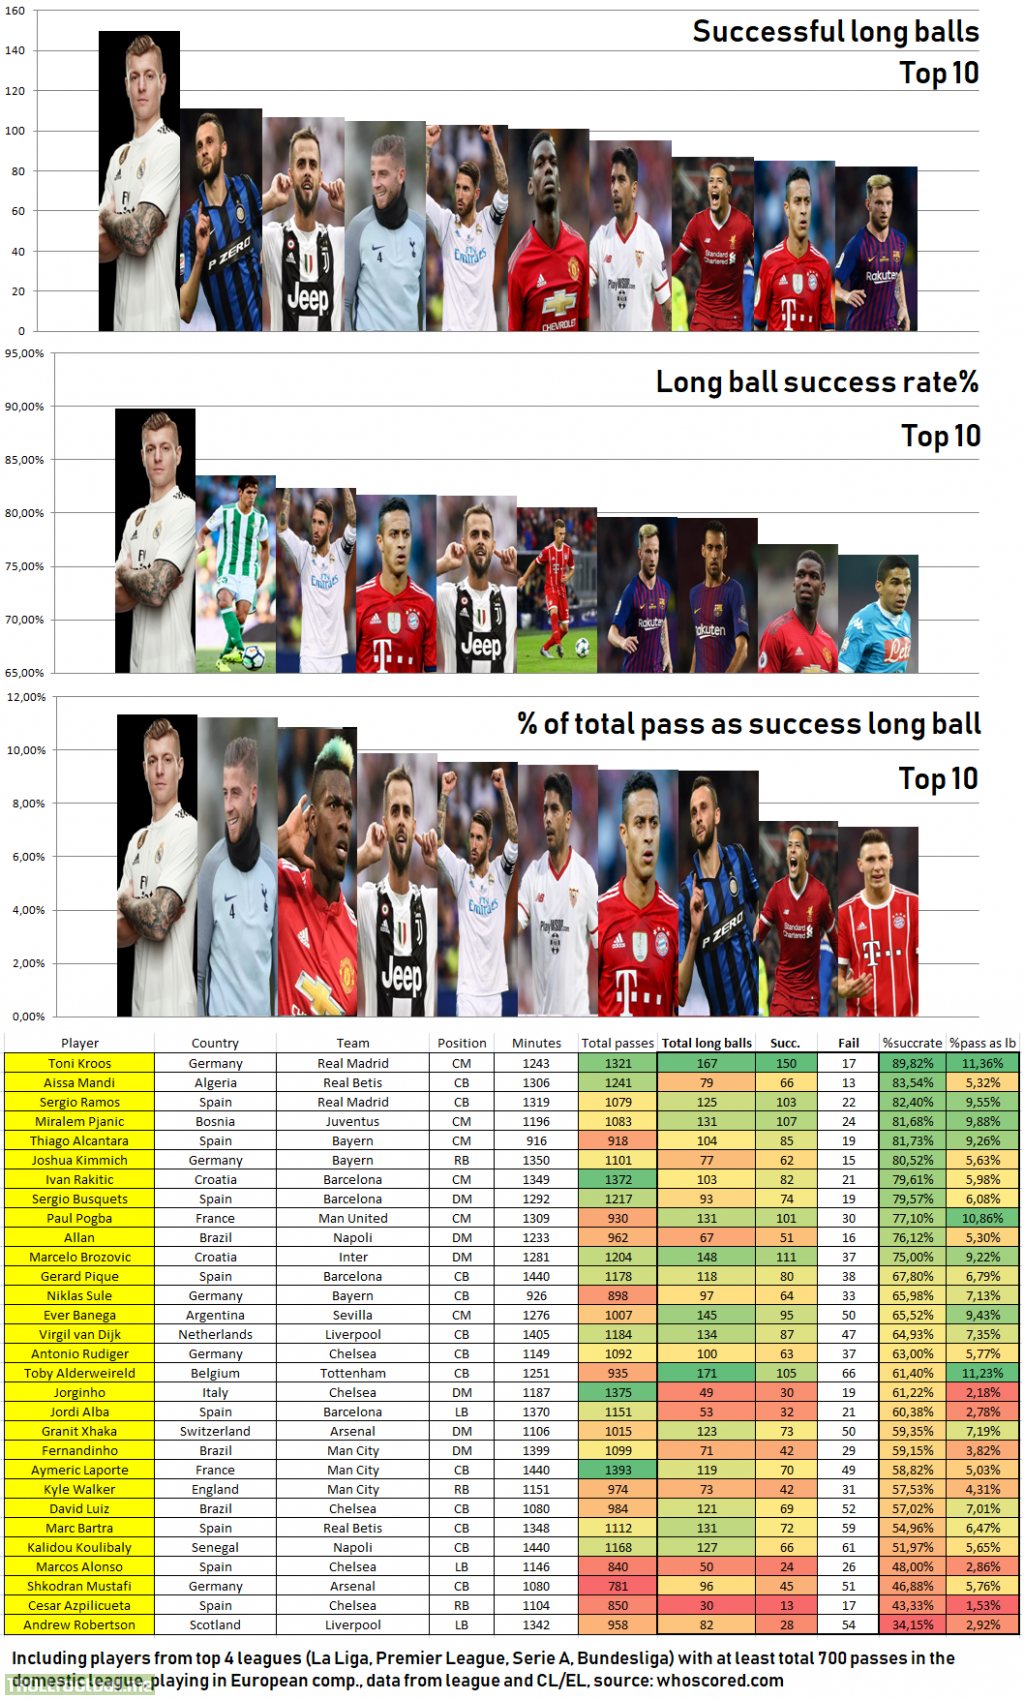 [OC Infographic] Toni Kroos insane long ball pass stats this season.